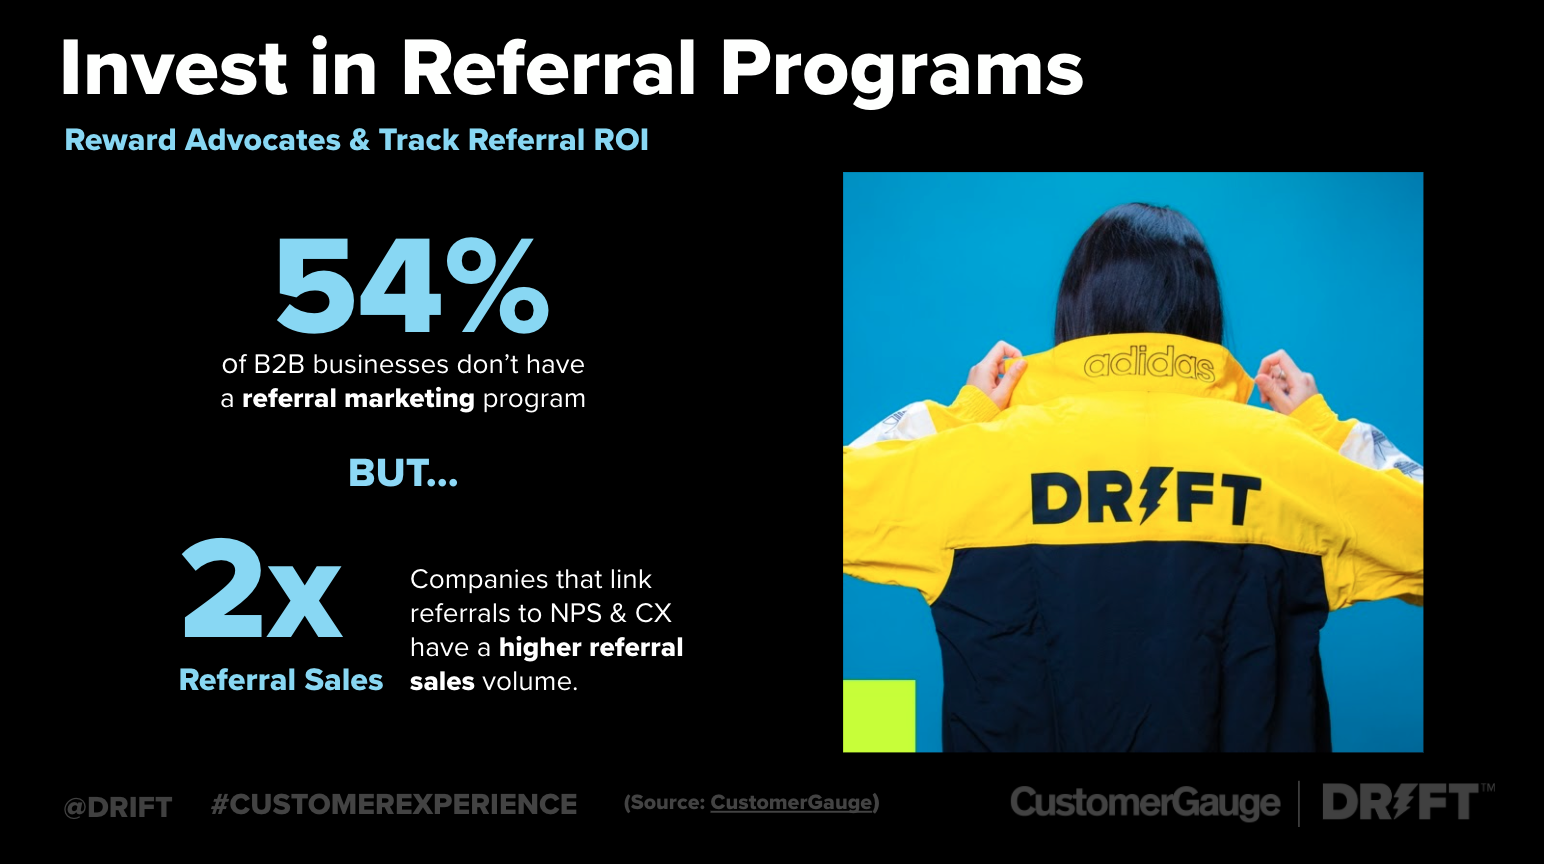 referrals programs for marketing ROI